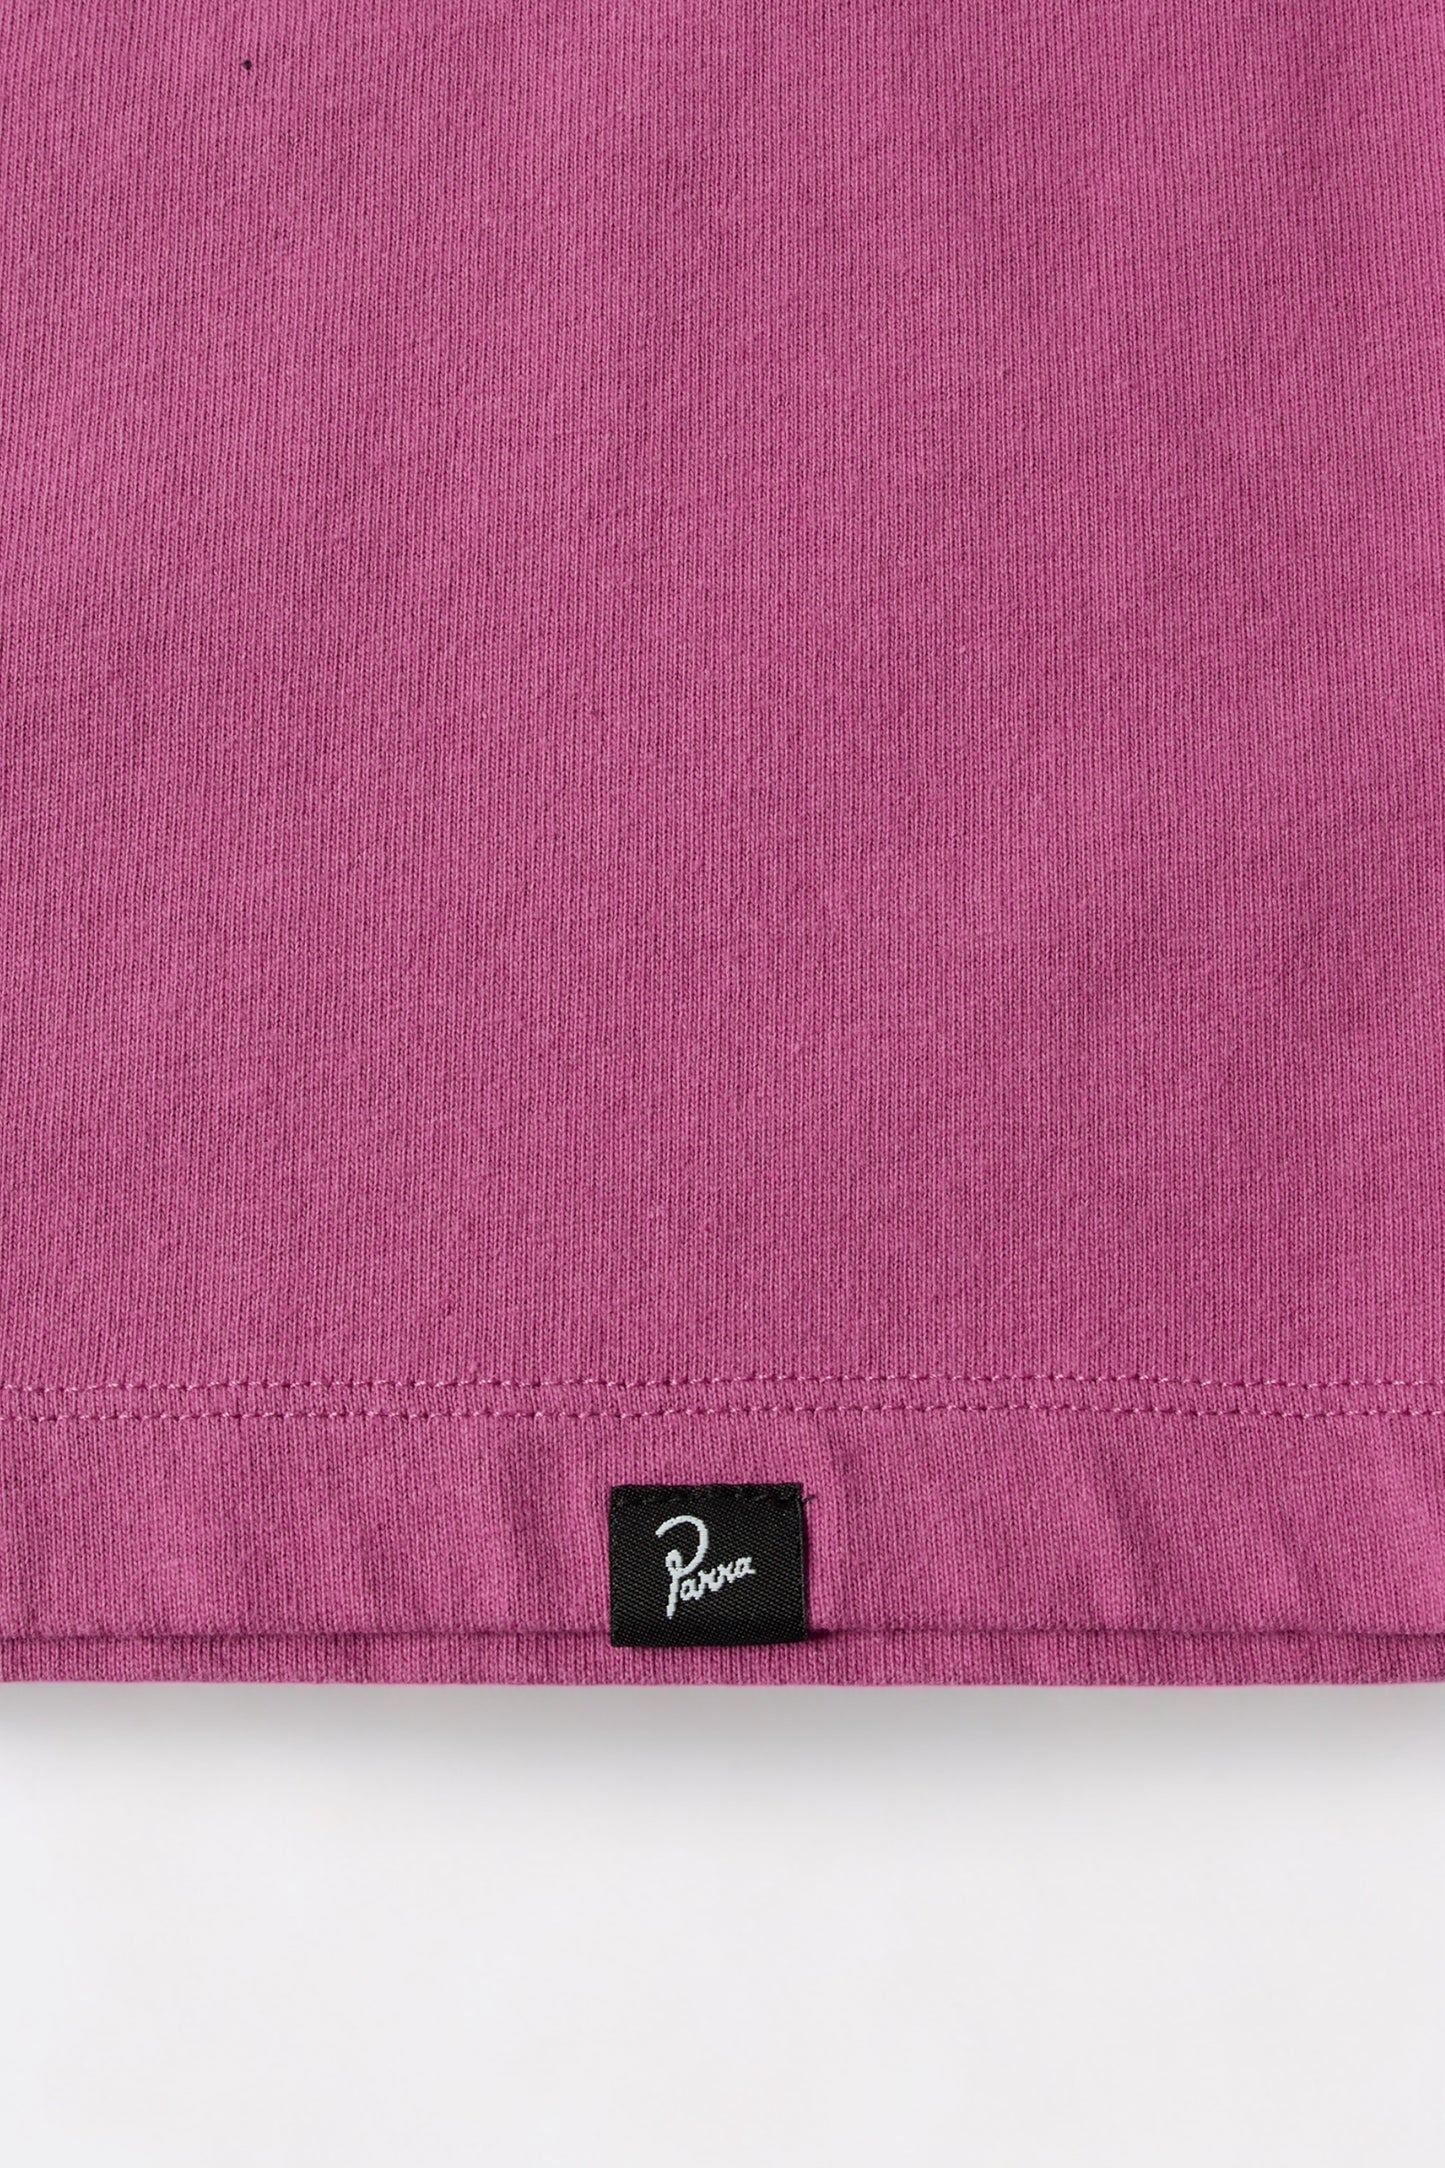 My Dear Swan T-Shirt (Pink)